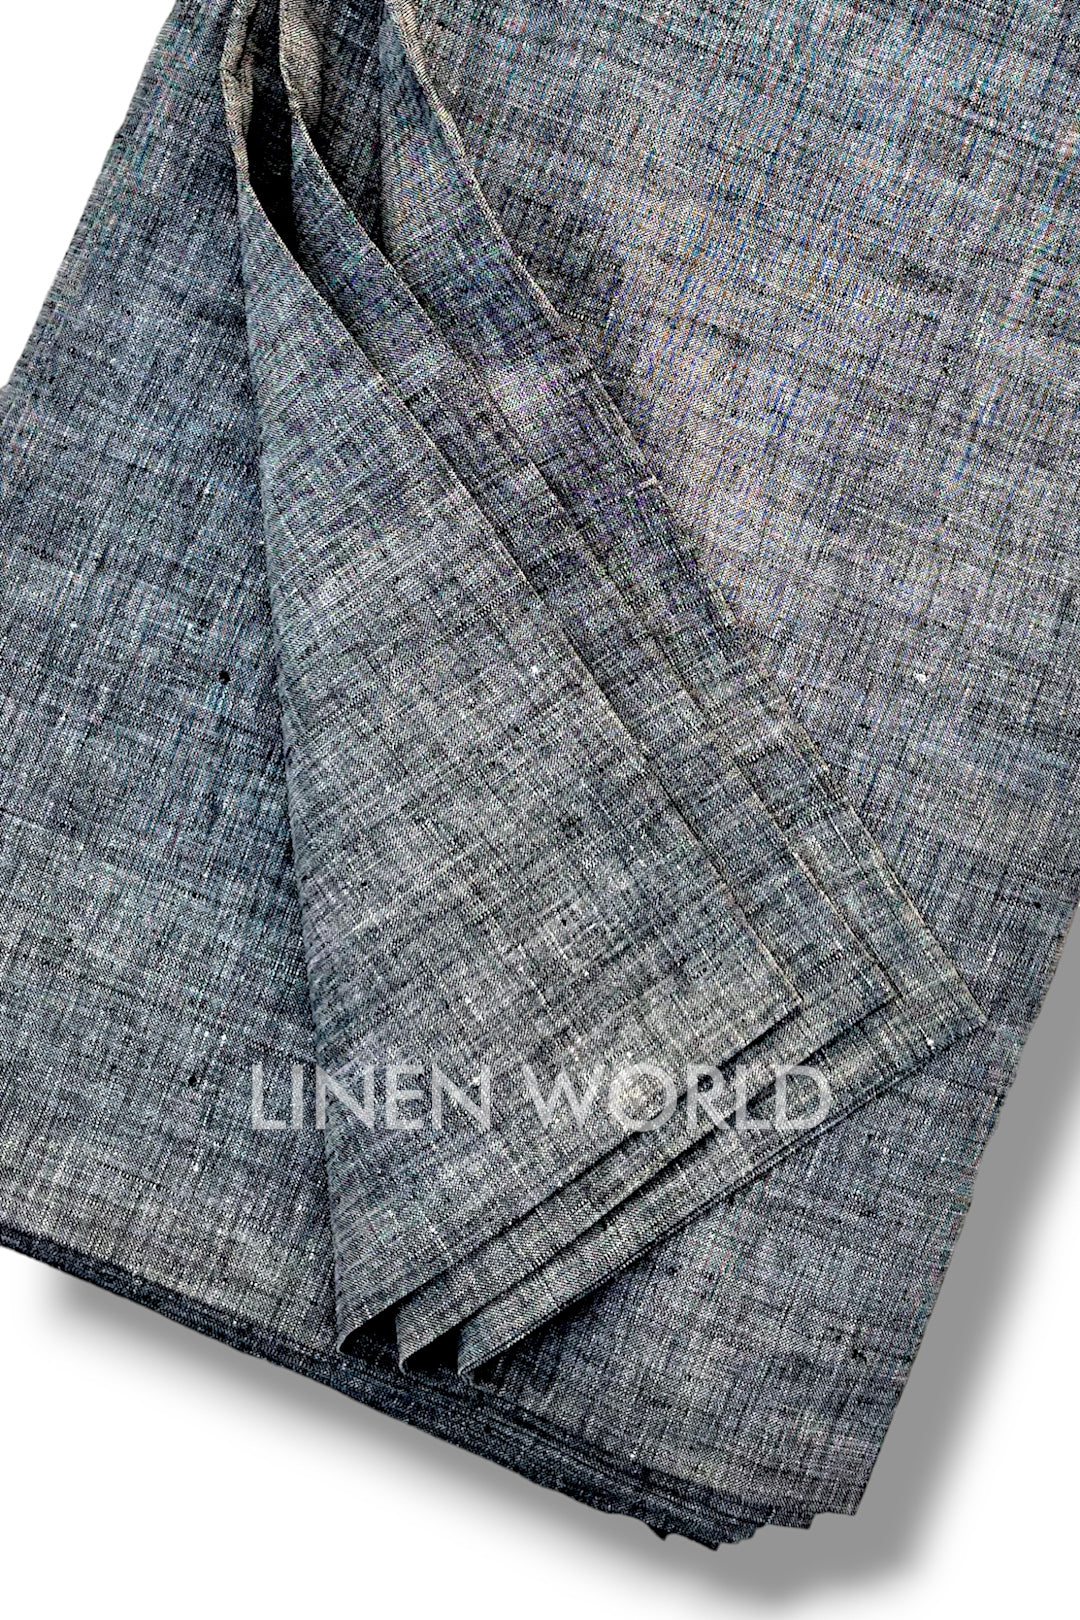 grey pure linen 60 lea shirting fabric - linenworldonline.in